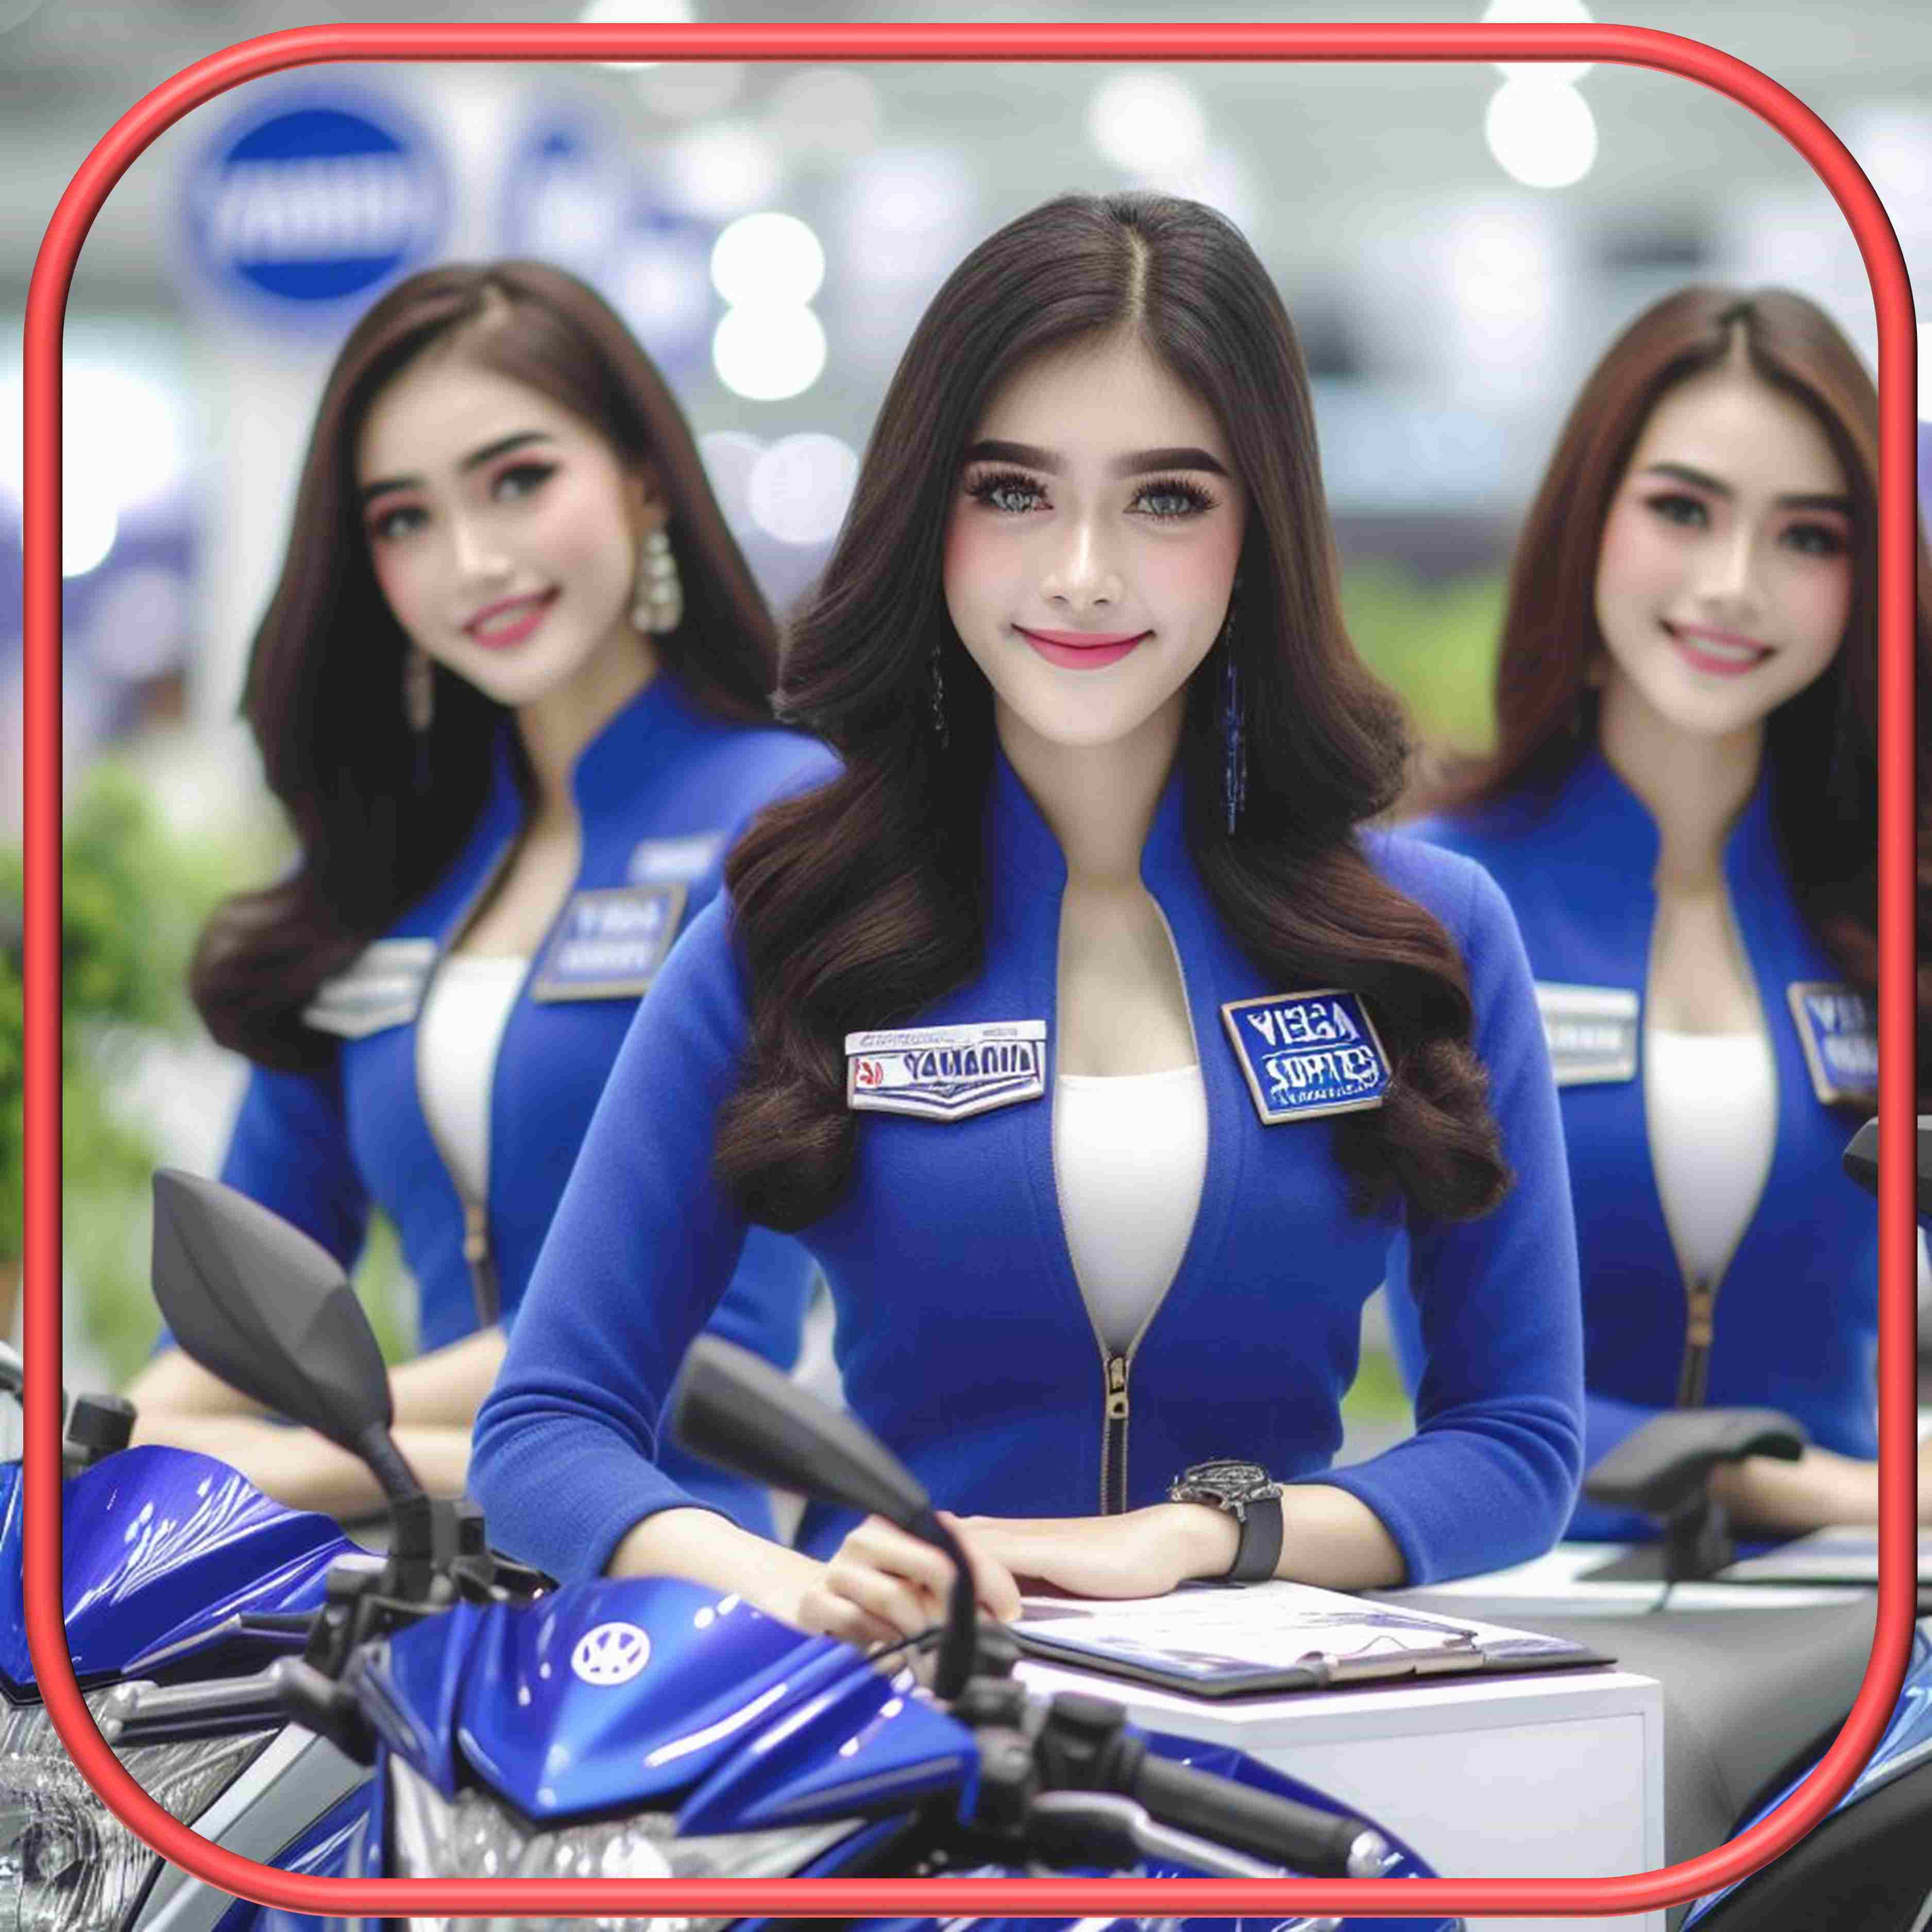 Harga Terjangkau untuk Motor Yamaha terdekat Banyubiru, Semarang